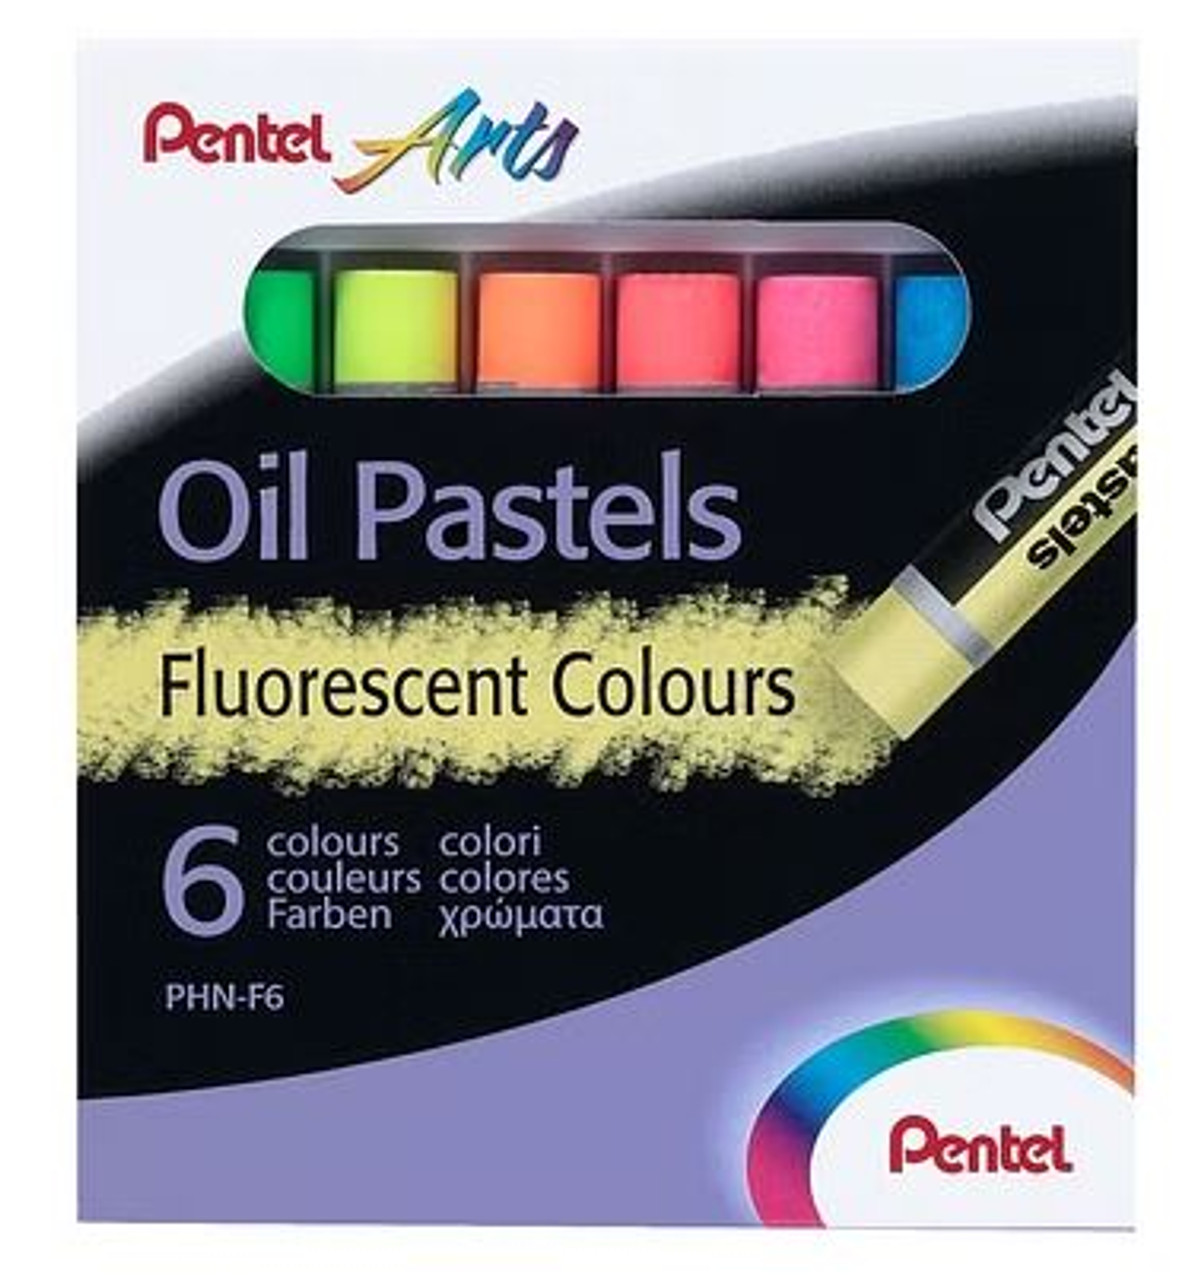 BRAND NEW Pentel Arts Oil Pastel Set Assorted Colors Set of 25 NOS